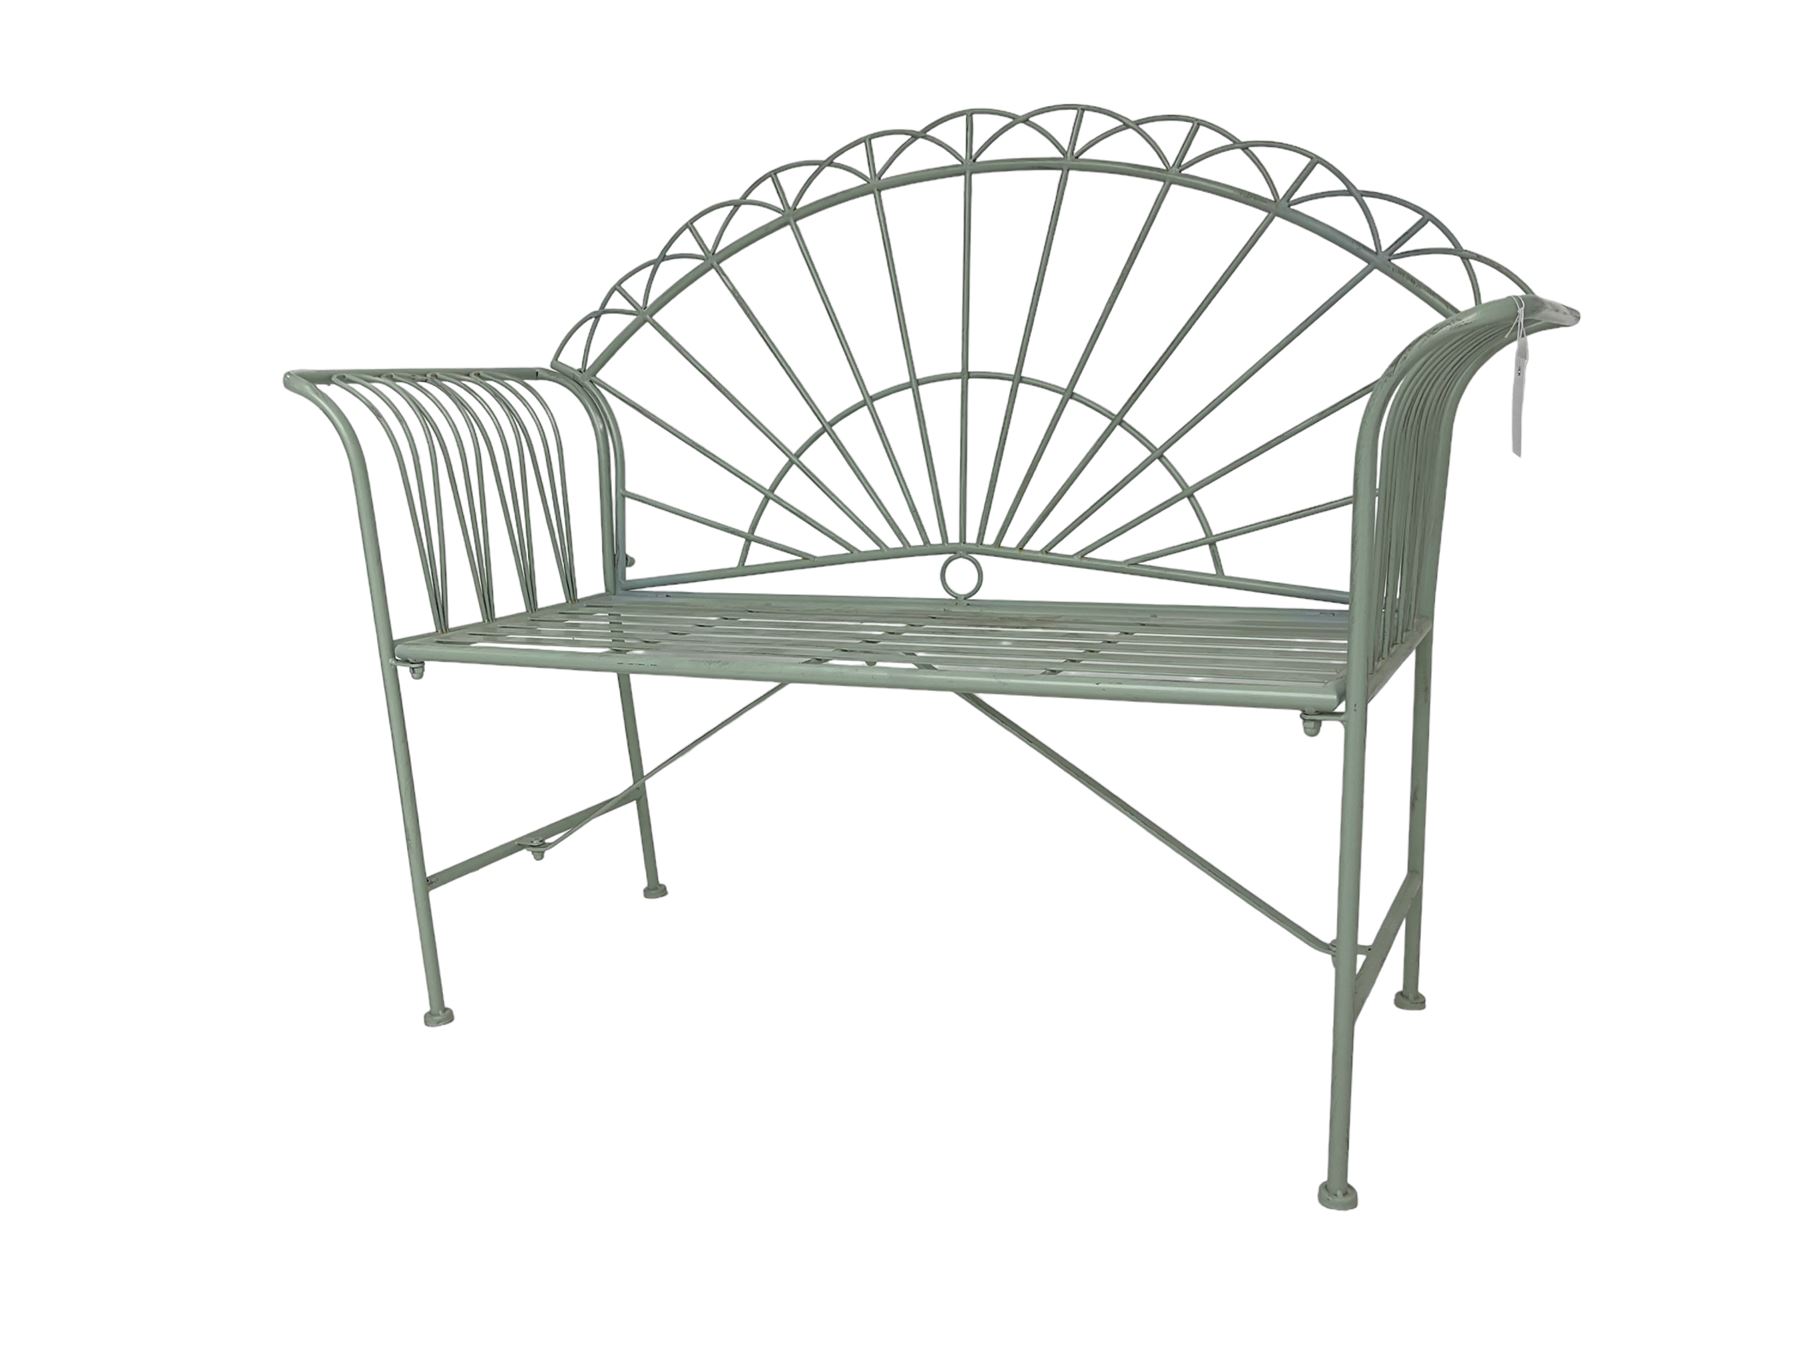 Regency design wrought metal bench - Image 6 of 6